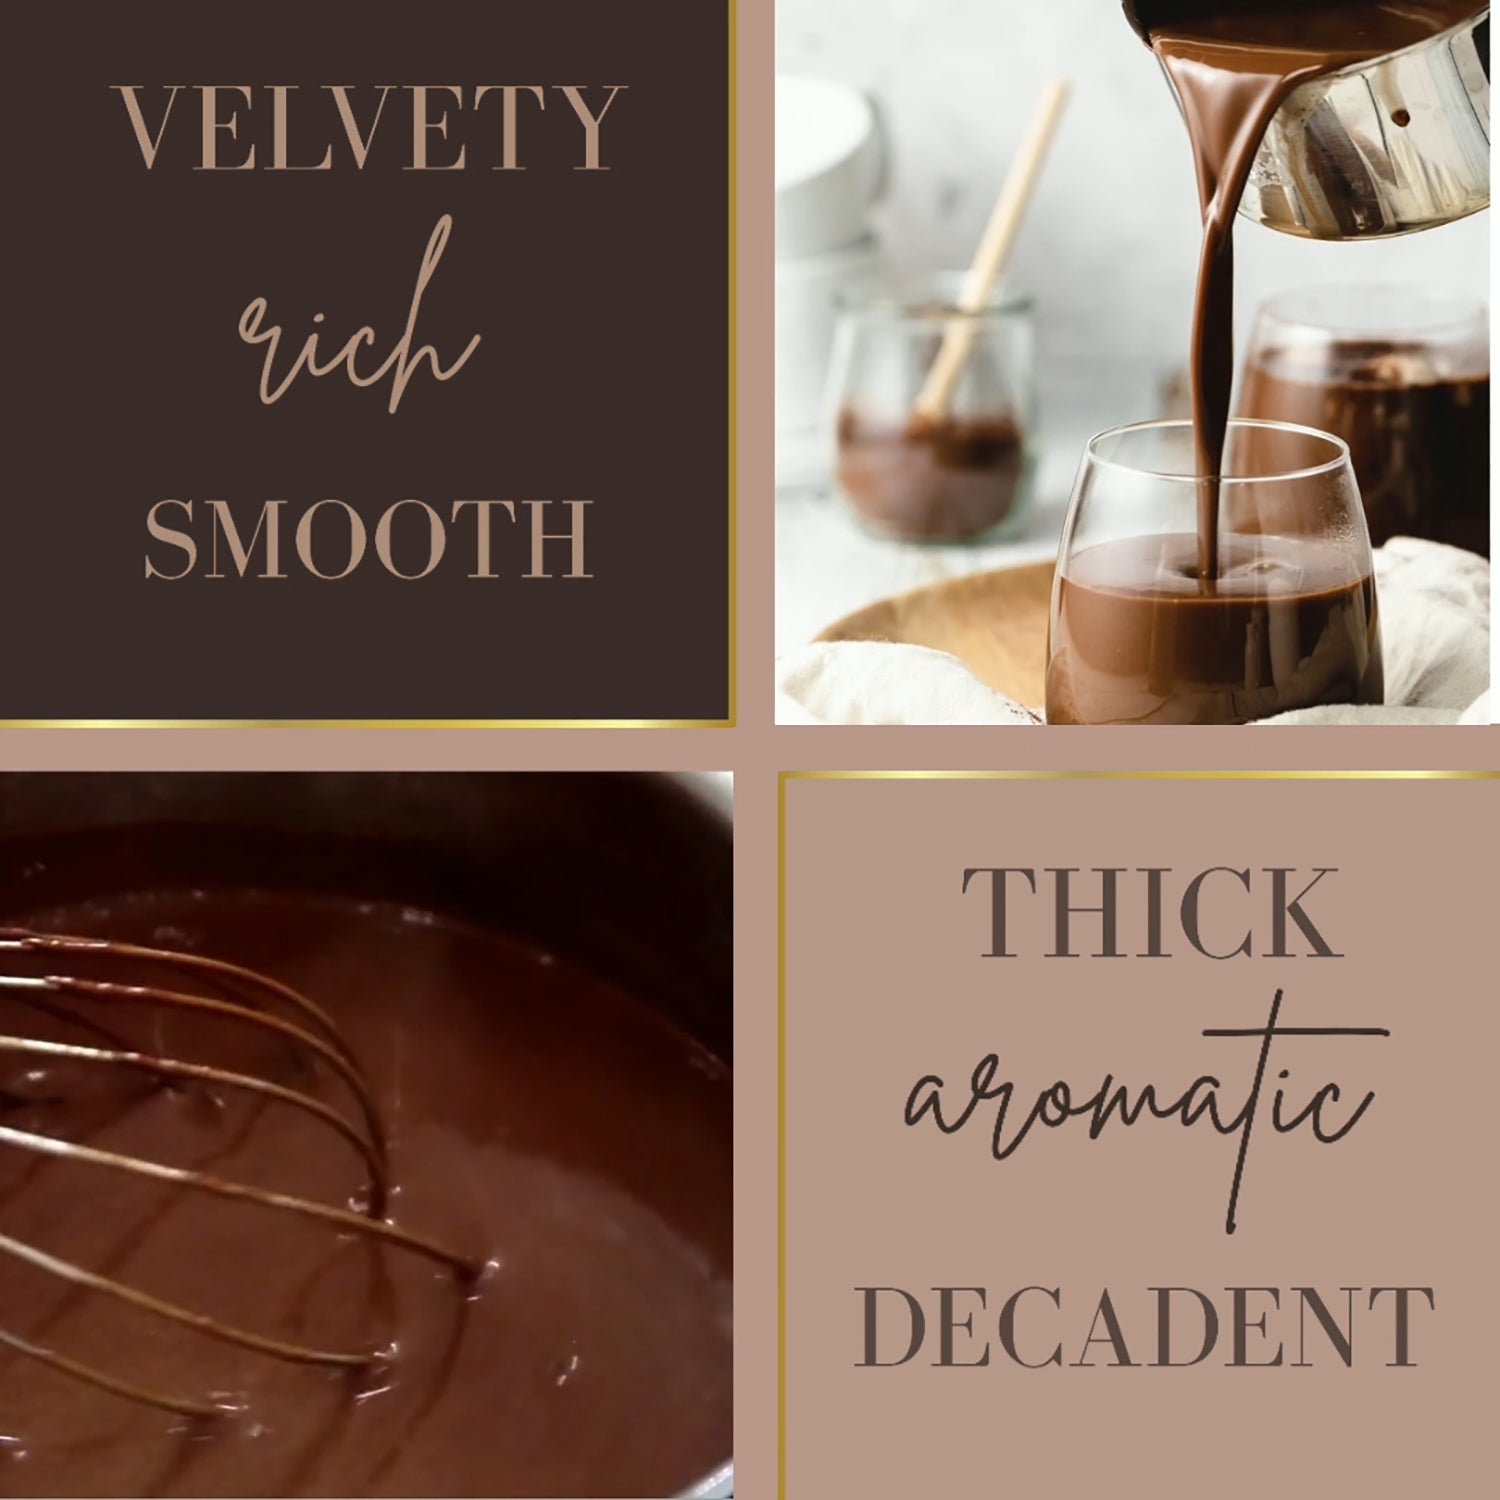 Relax & Focus | Sugar Free Drinking Chocolate Sachet Hamper